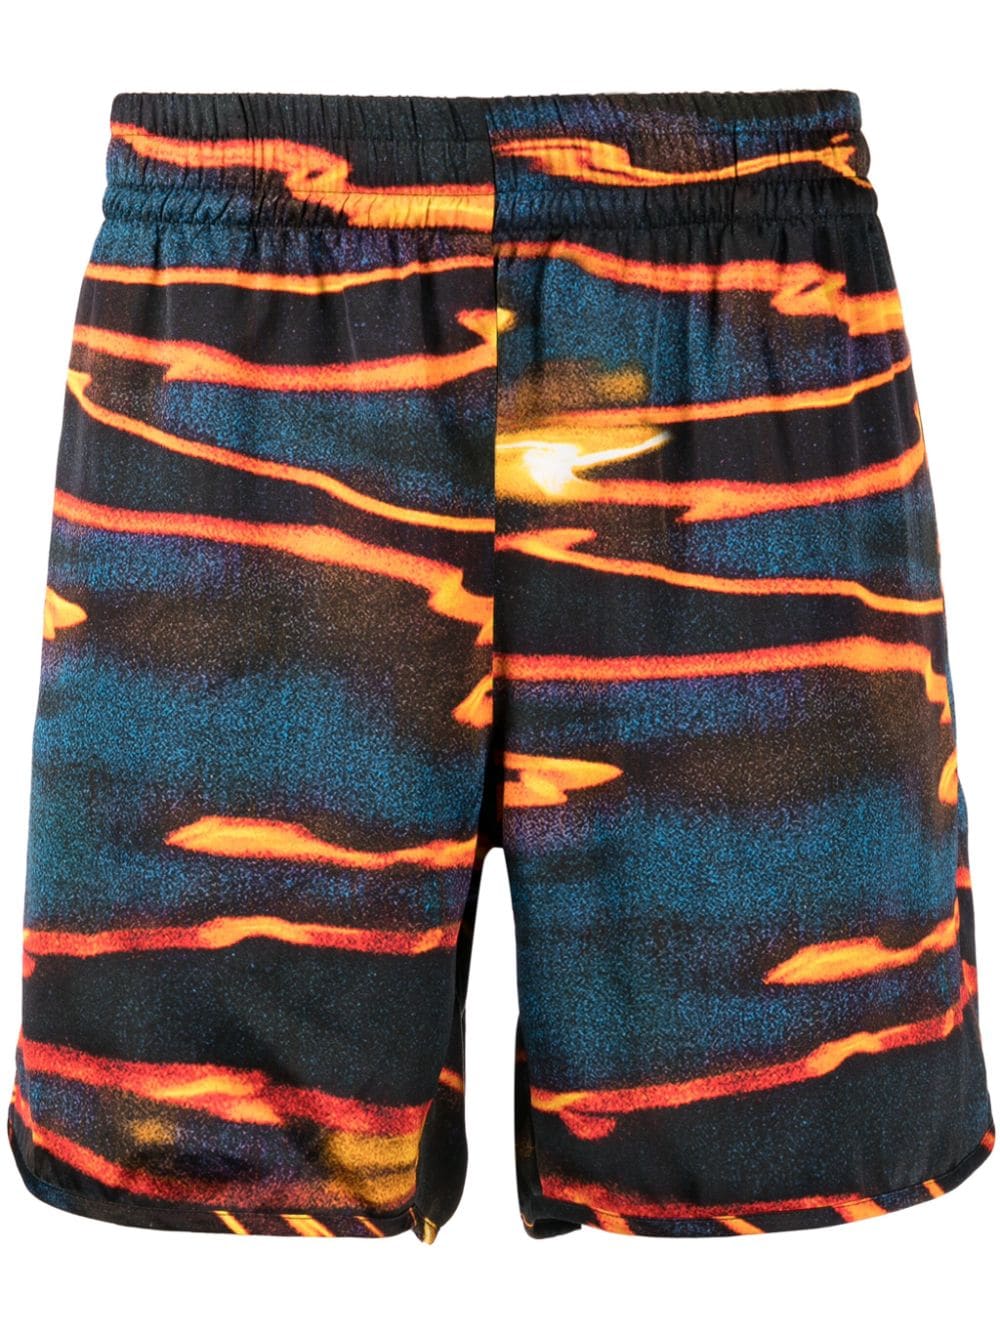 BLUE SKY INN Sunset Sea shorts - Multicolore